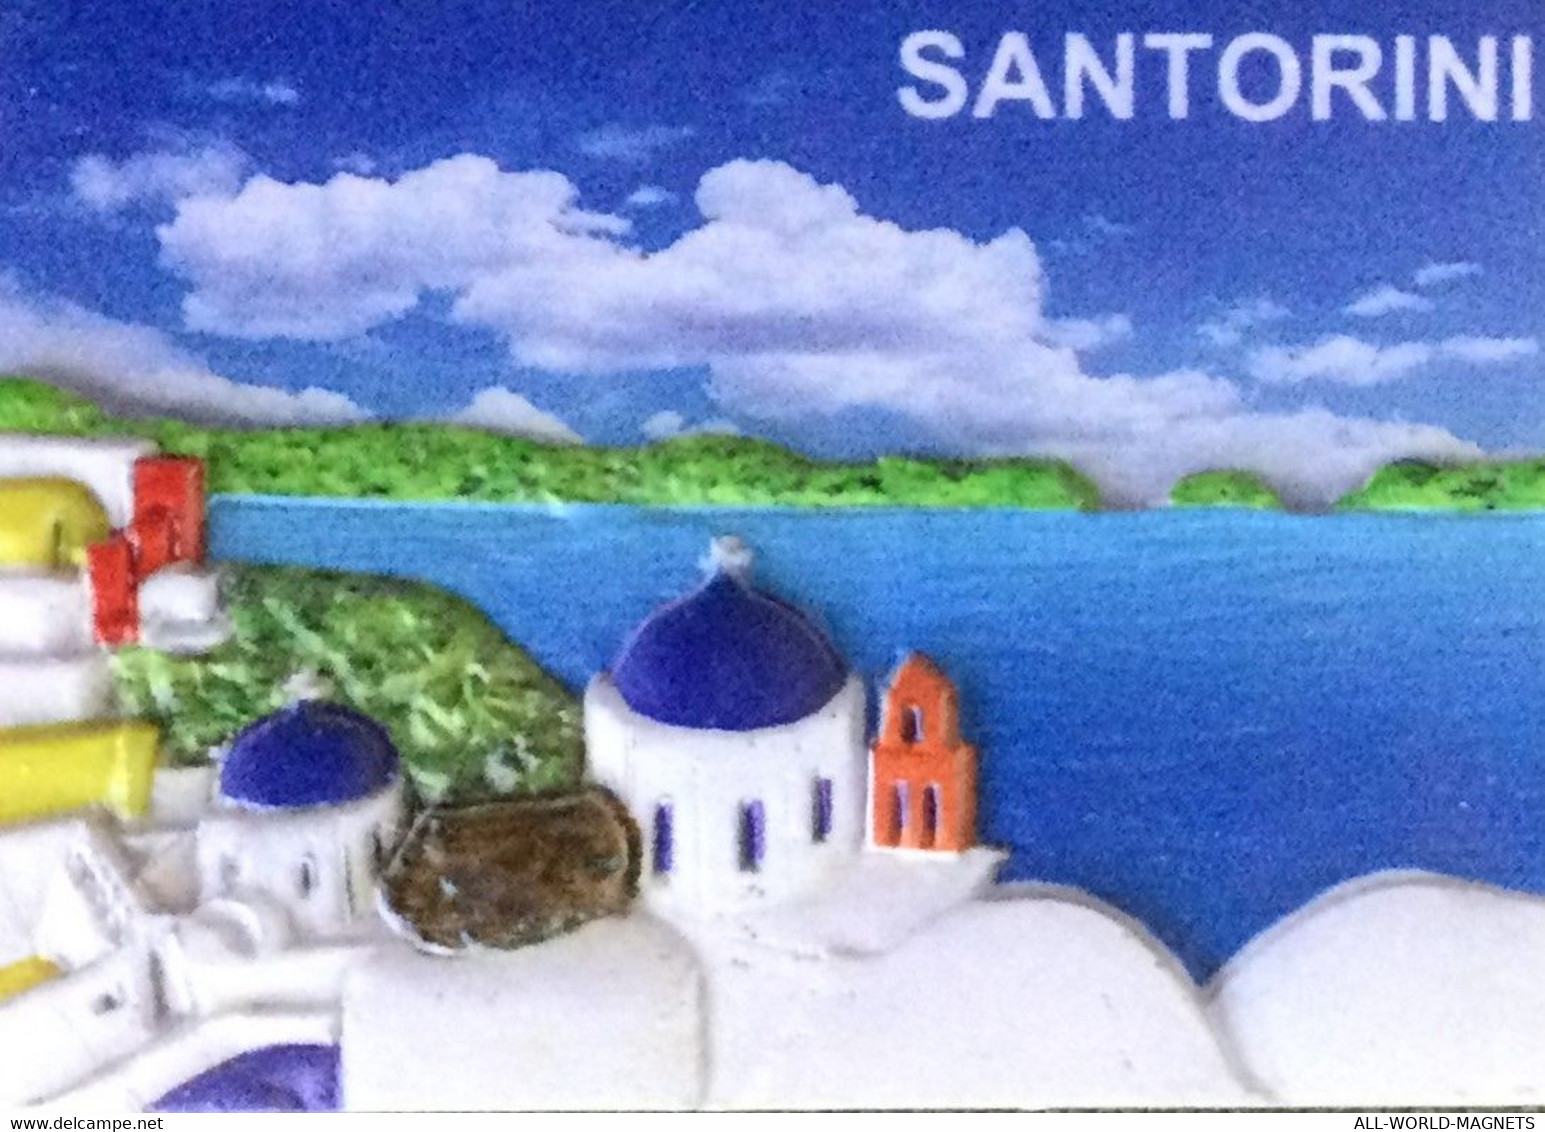 Thera Santorini Island View Fridge Magnet Souvenir, Greece - Magnetos